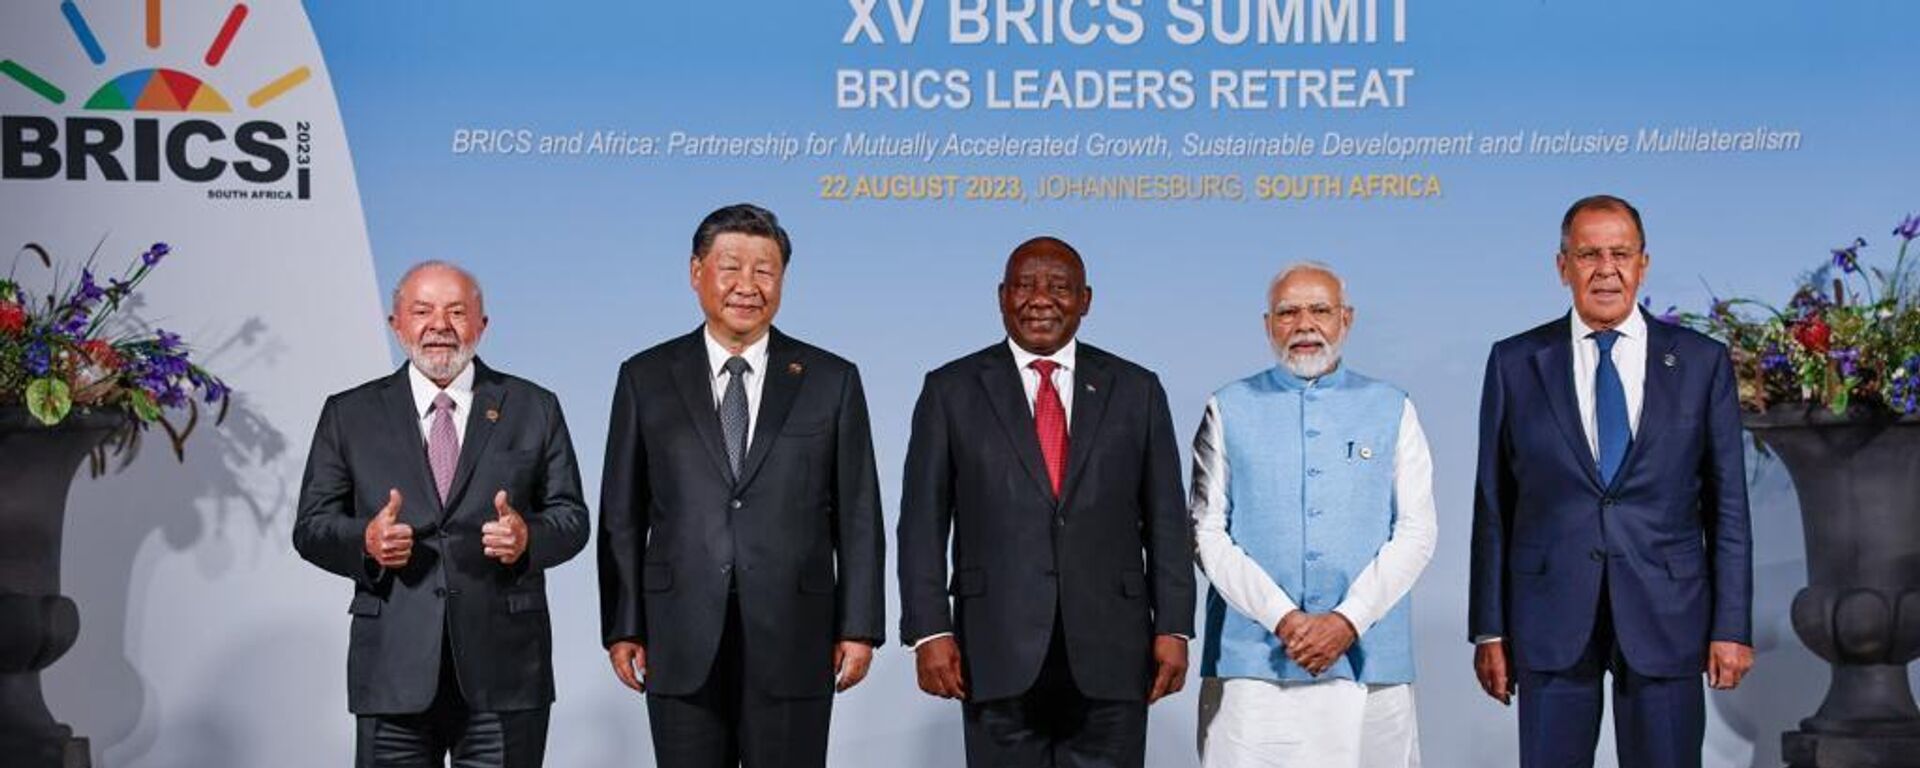 La cumbre de los BRICS se realiza del 22 al 24 de agosto en Sudáfrica - Sputnik Mundo, 1920, 23.08.2023